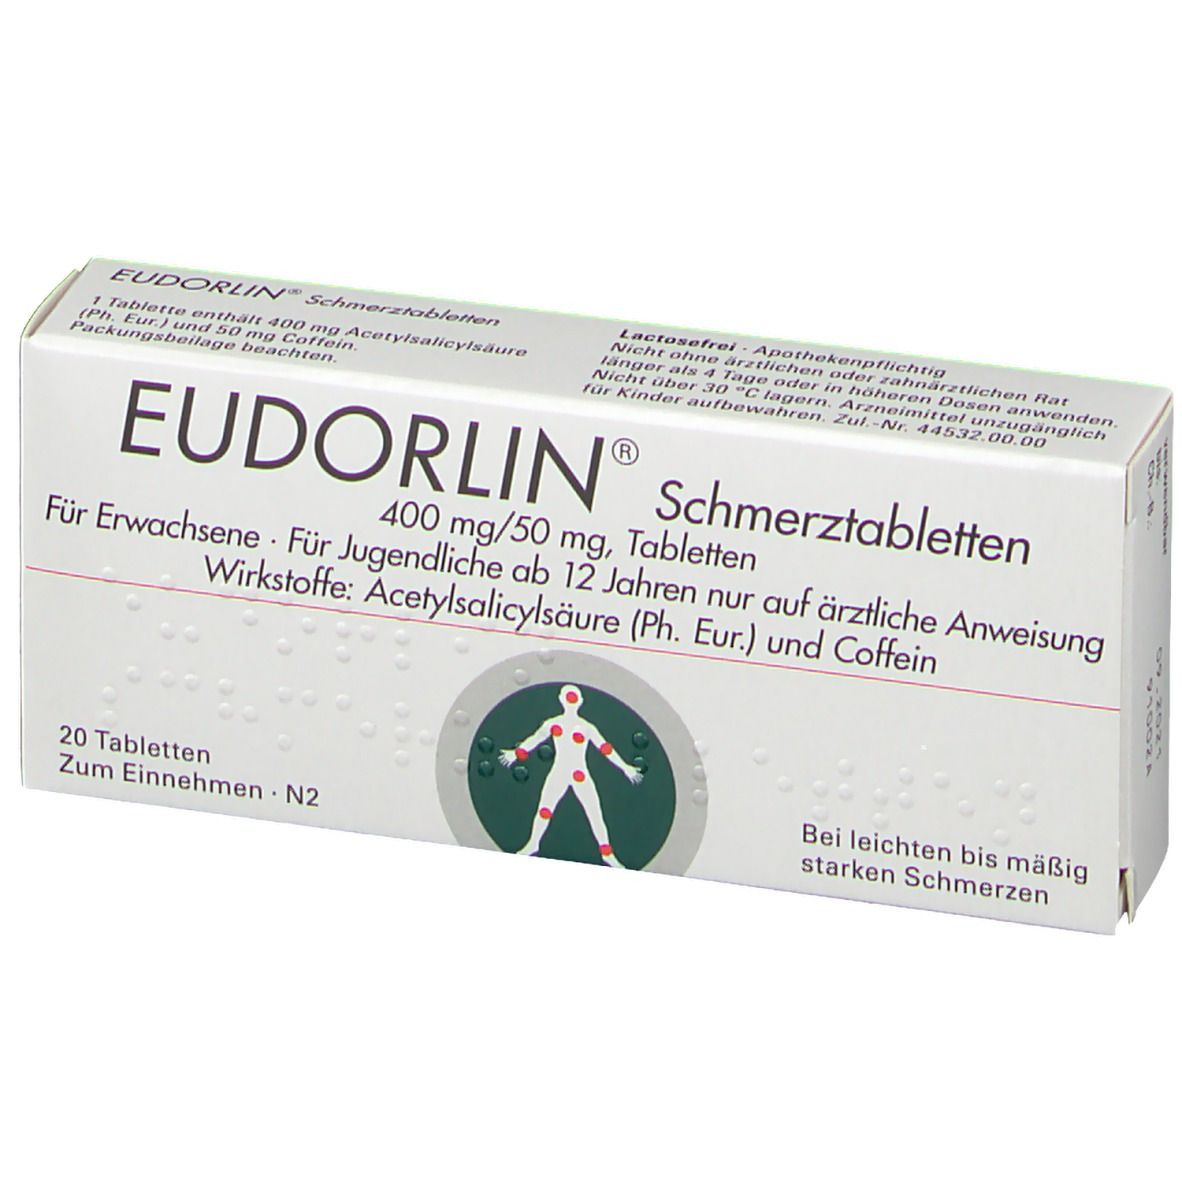 EUDORLIN® Schmerztabletten